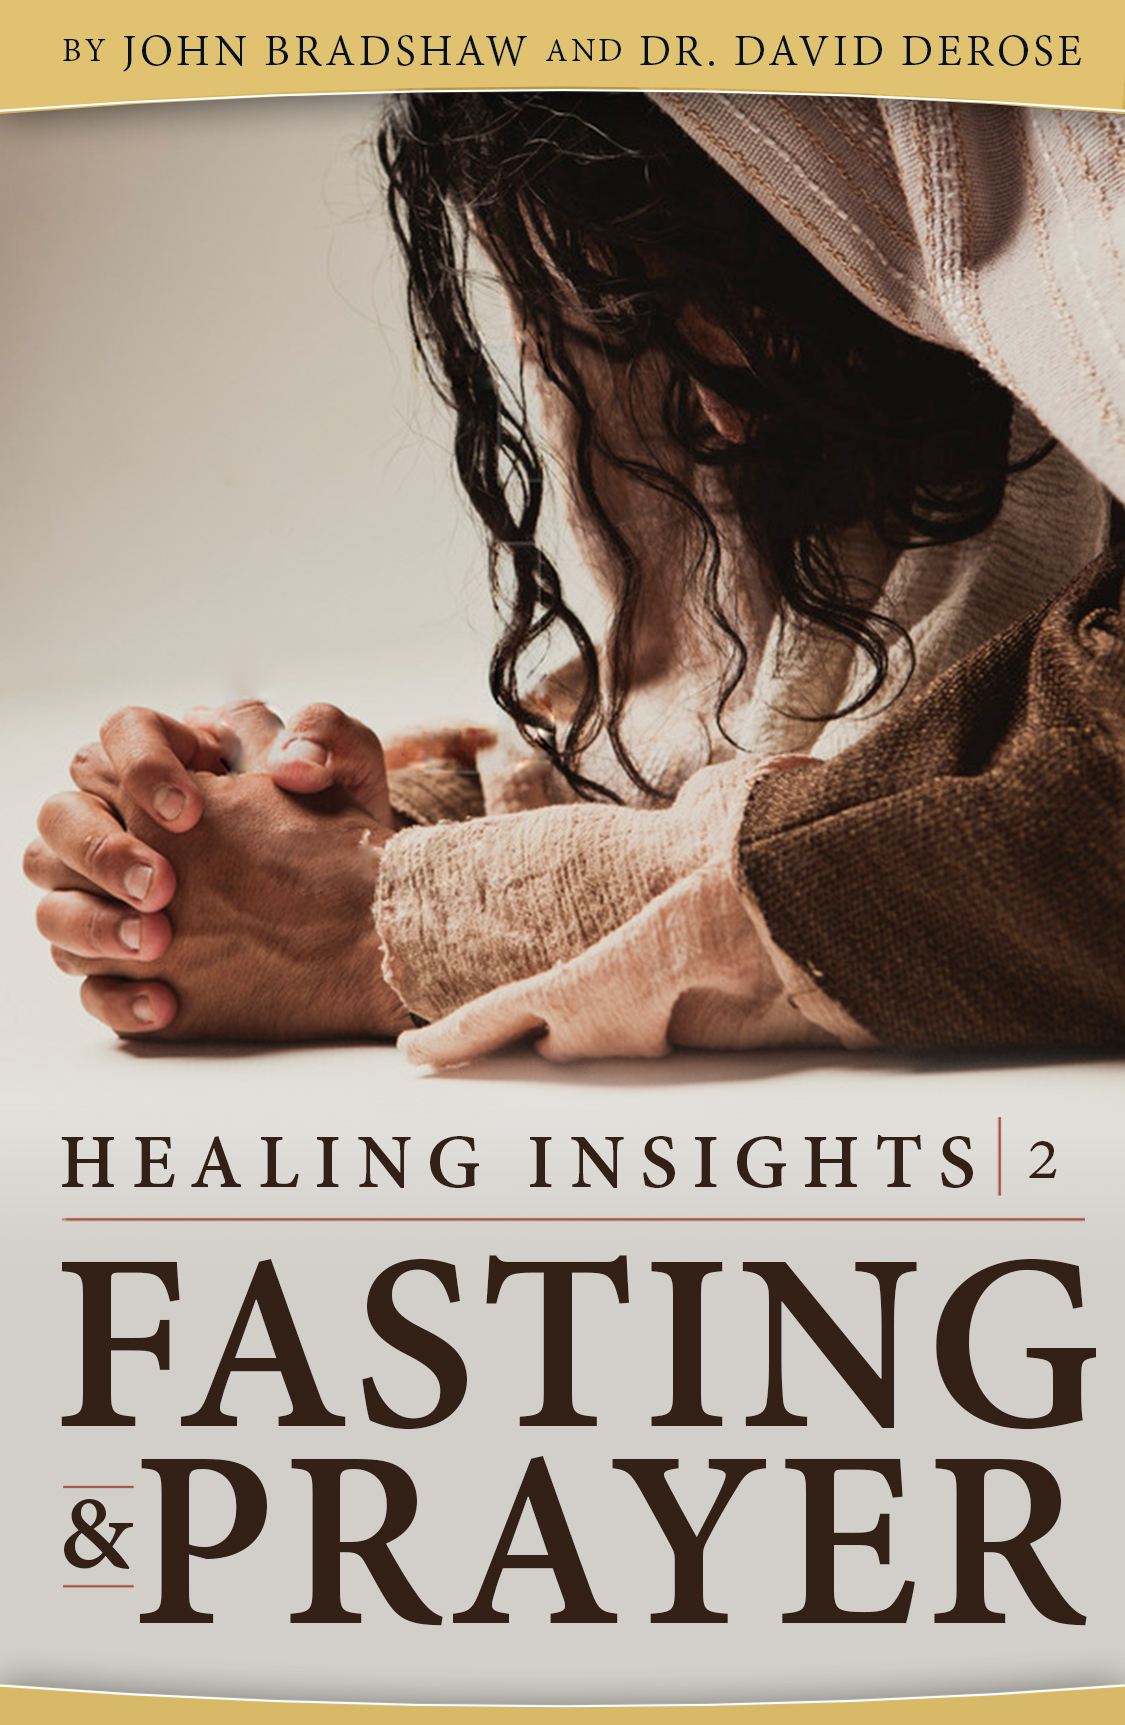 books Christian fasting jesus prayer Book Cover Design meditation stress relief theology